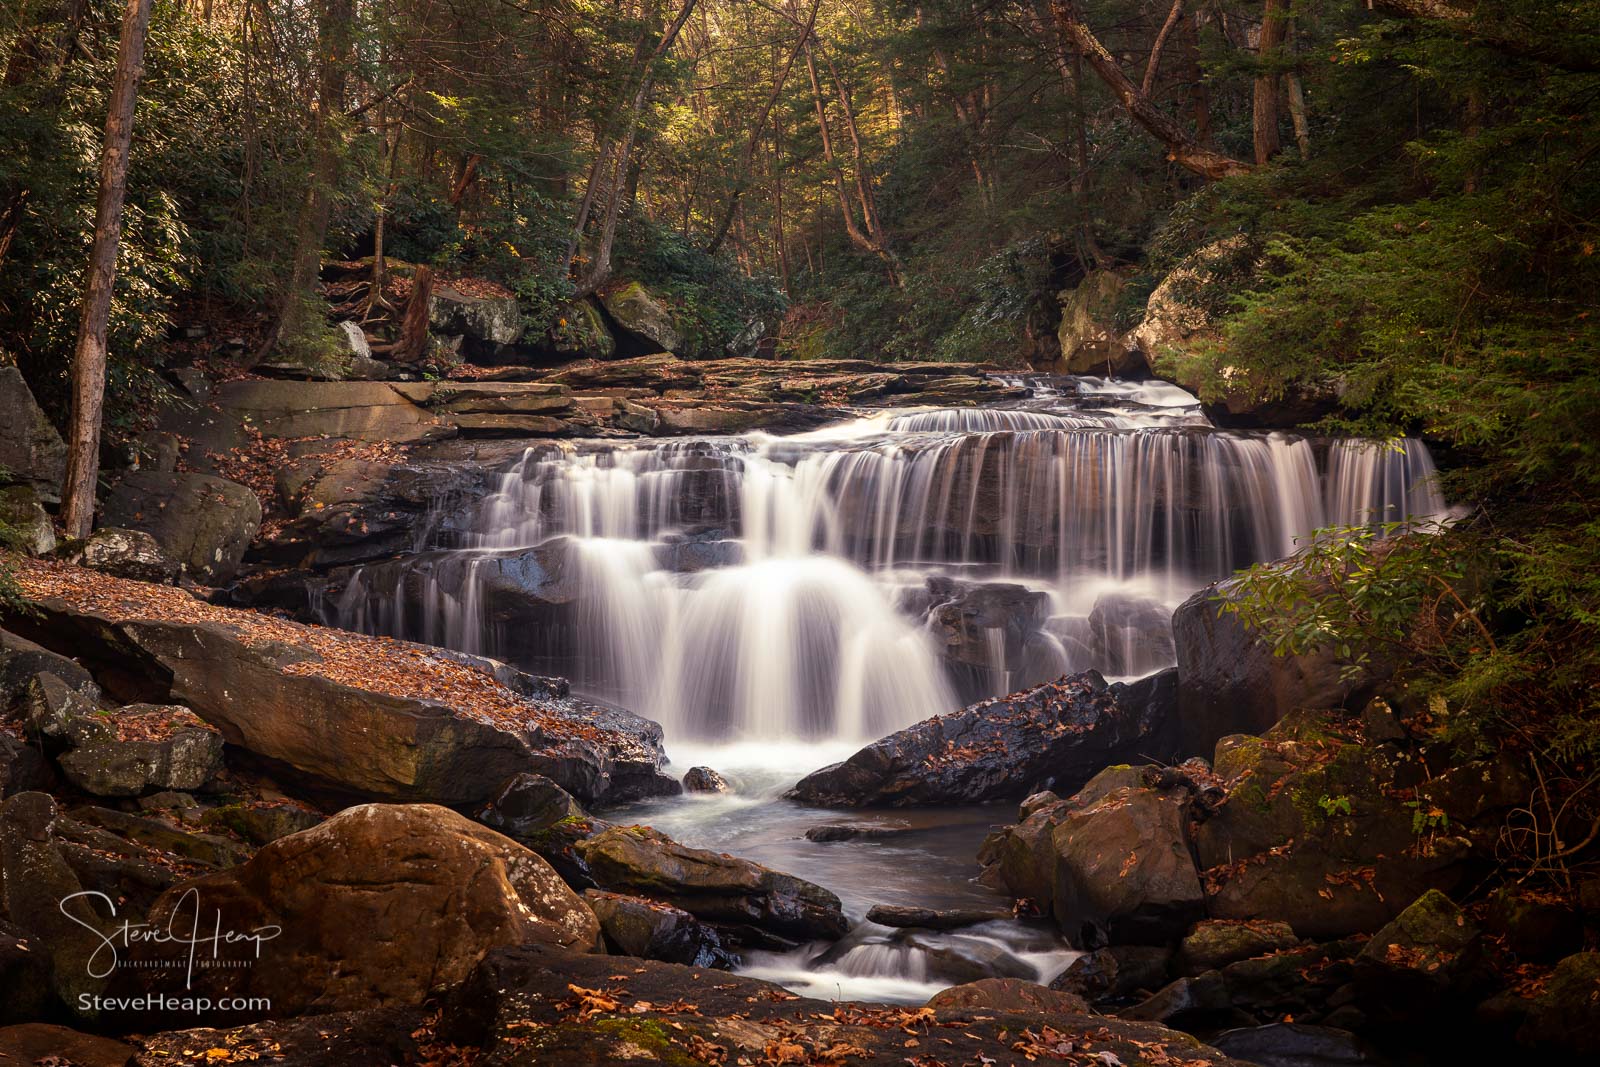 The Waterfalls on Decker’s Creek